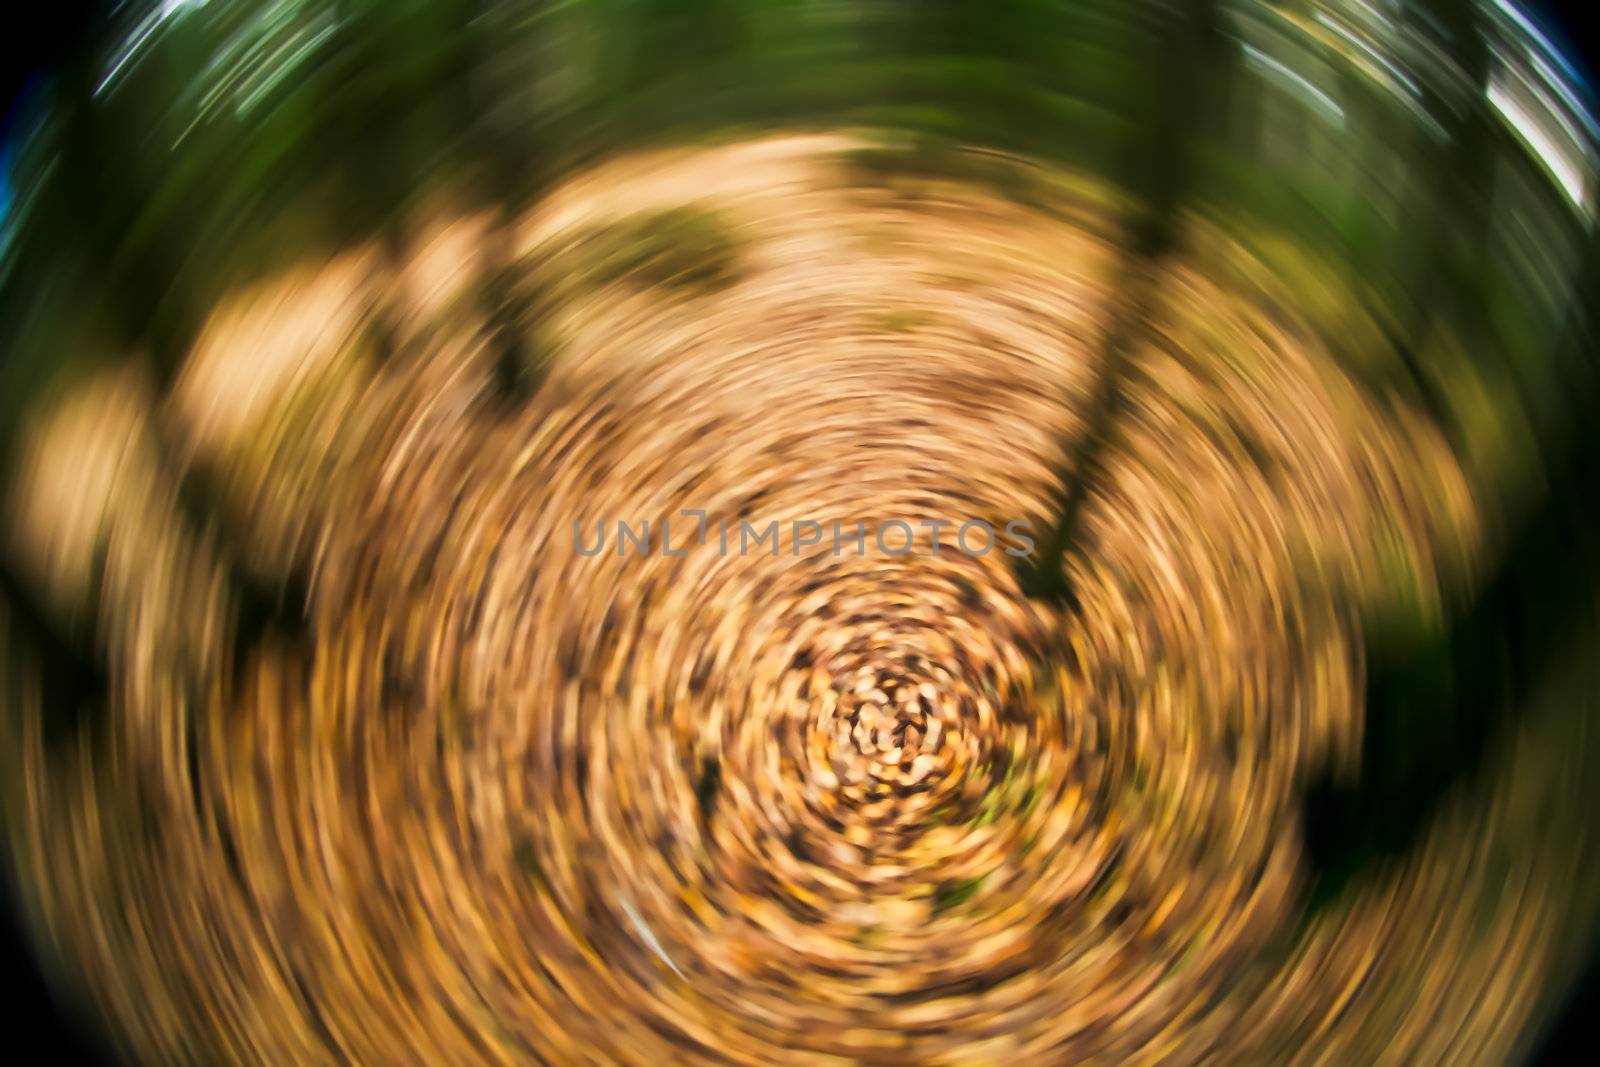 dizziness in a forest by KonstantinChe